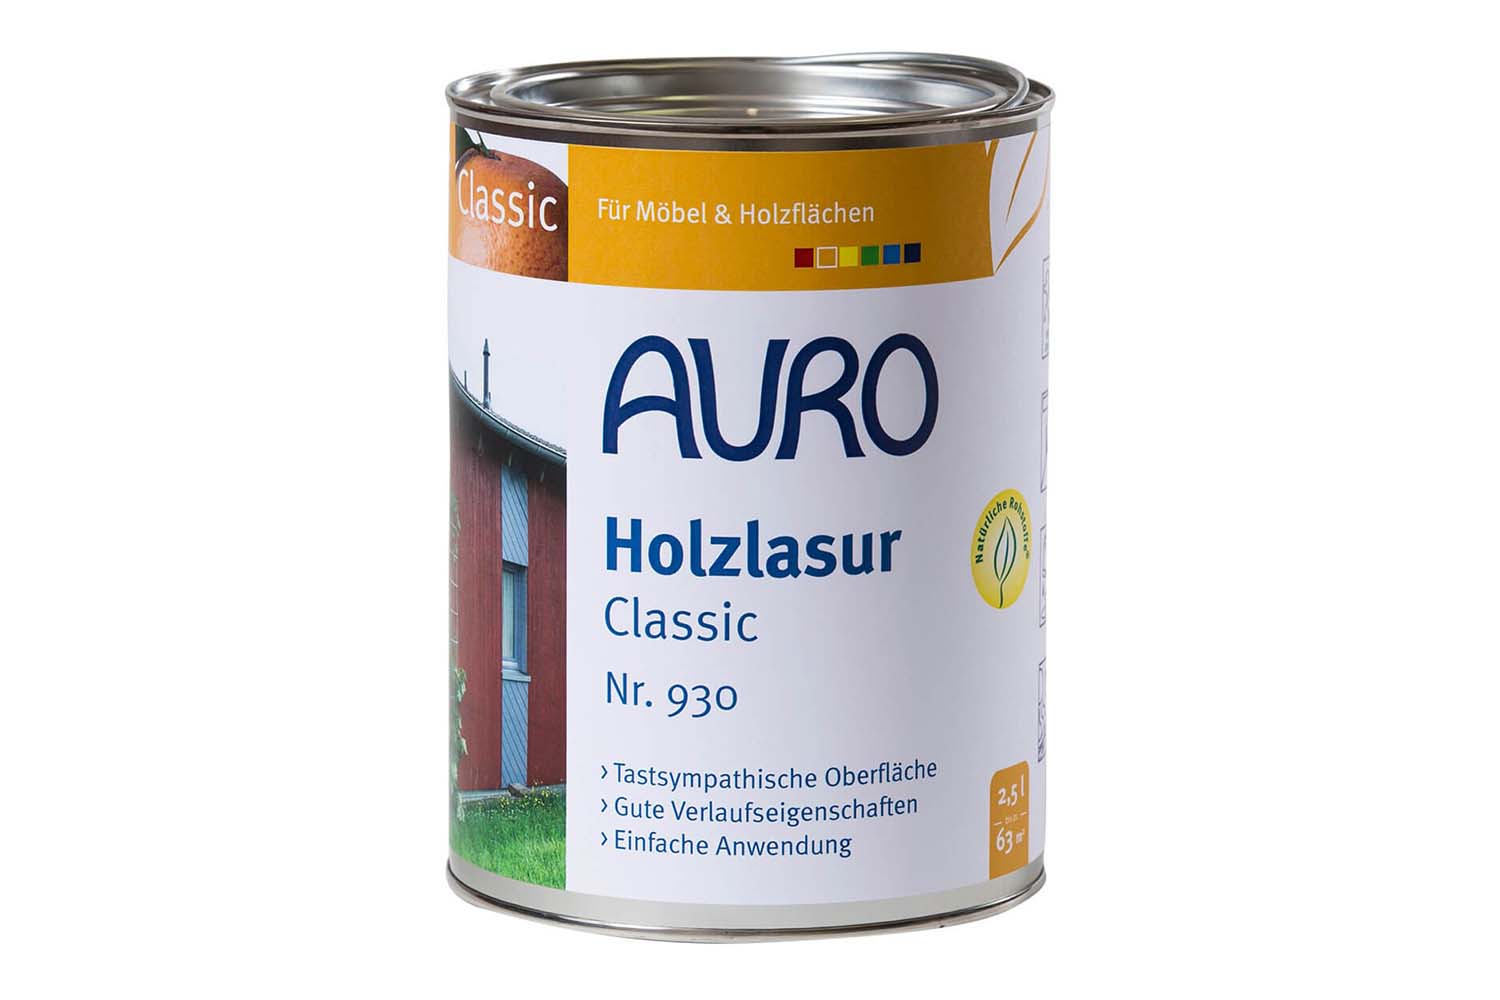 Auro Holzlasur Classic Nr. 930 - Farblos